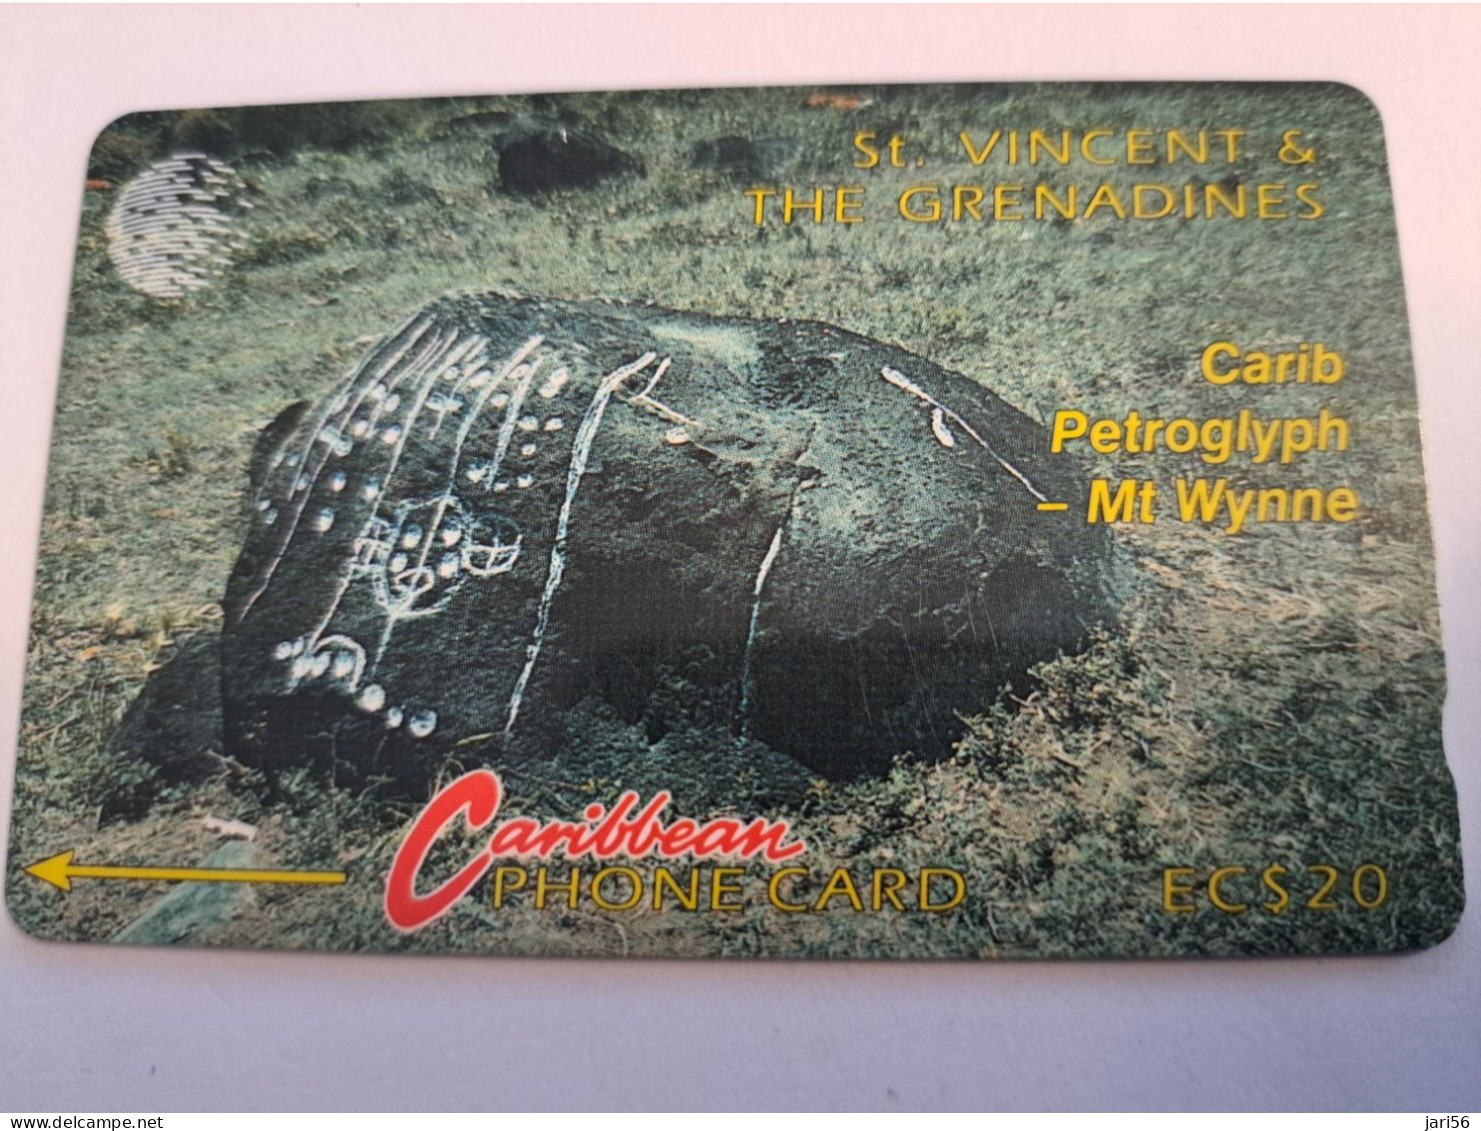 ST VINCENT & GRENADINES  GPT CARD   $ 20,-  5CSVB  CARIB PETROGLYPH     C&W    Fine Used  Card  **16052 ** - San Vicente Y Las Granadinas